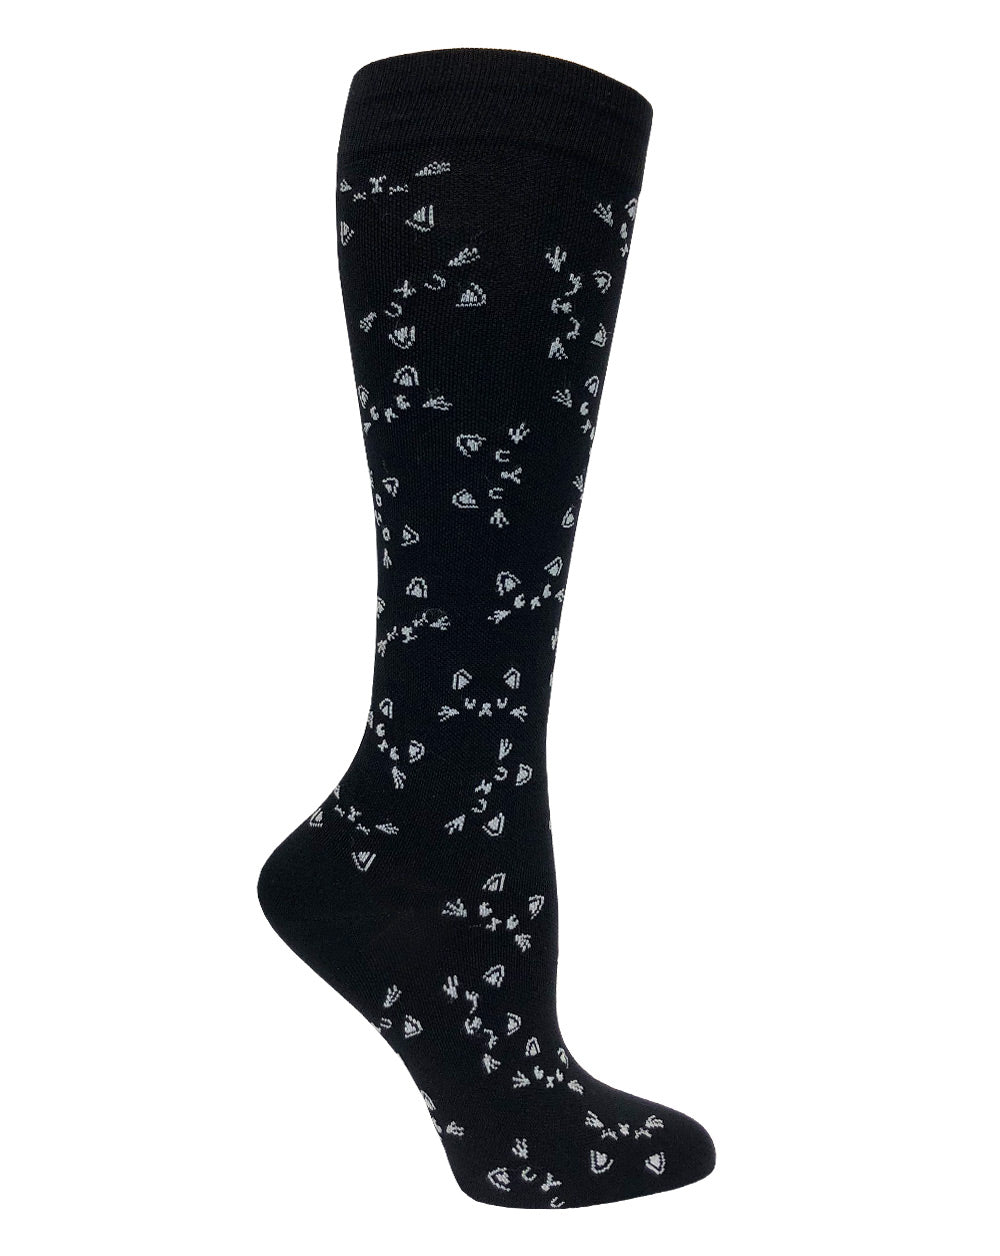 12" Premium Knit Compression Socks - Cats Black & White